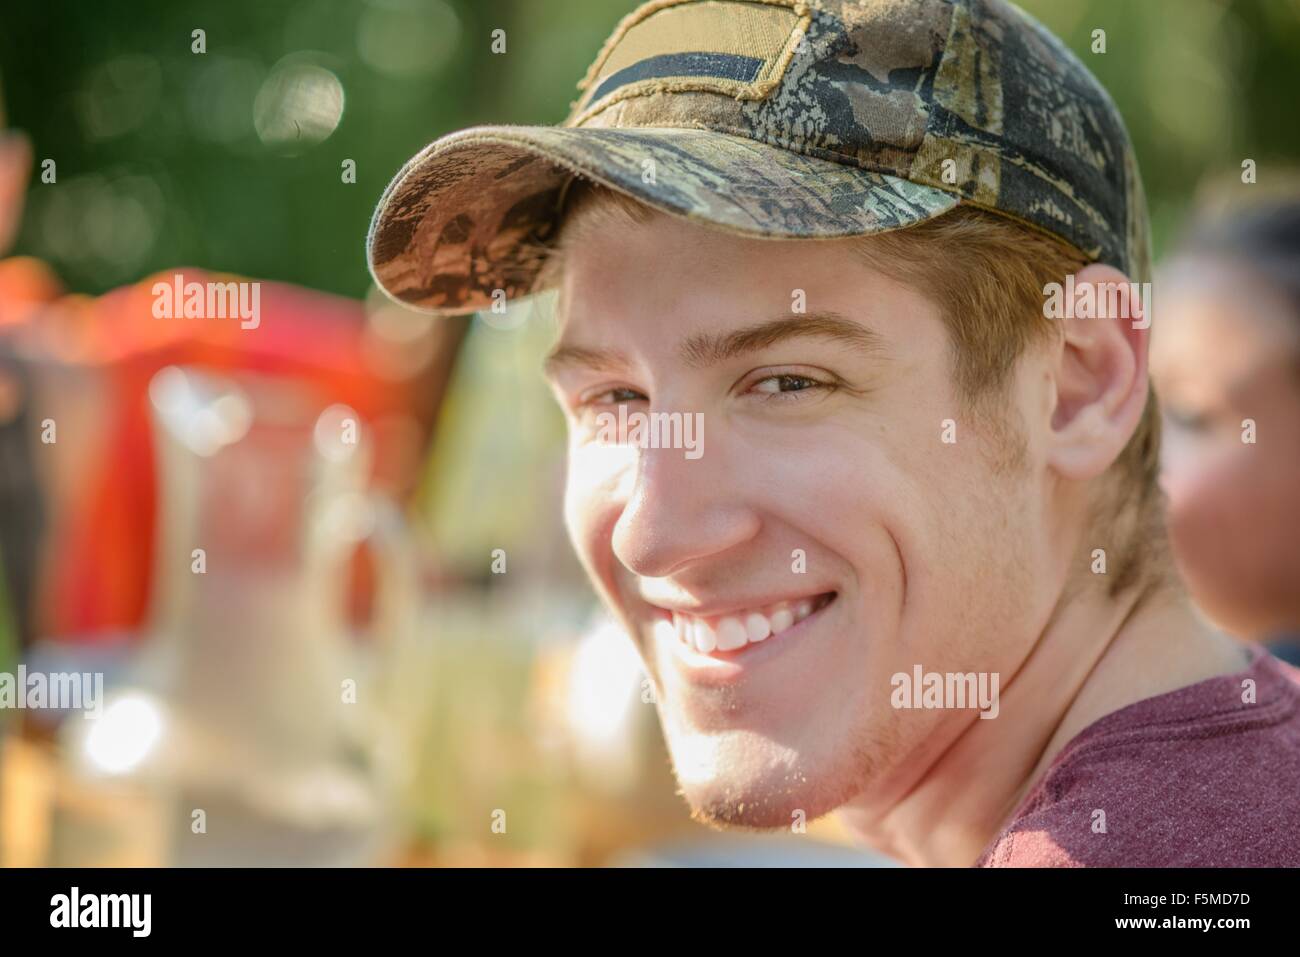 Man smiling at tomato eating festival Stock Photo